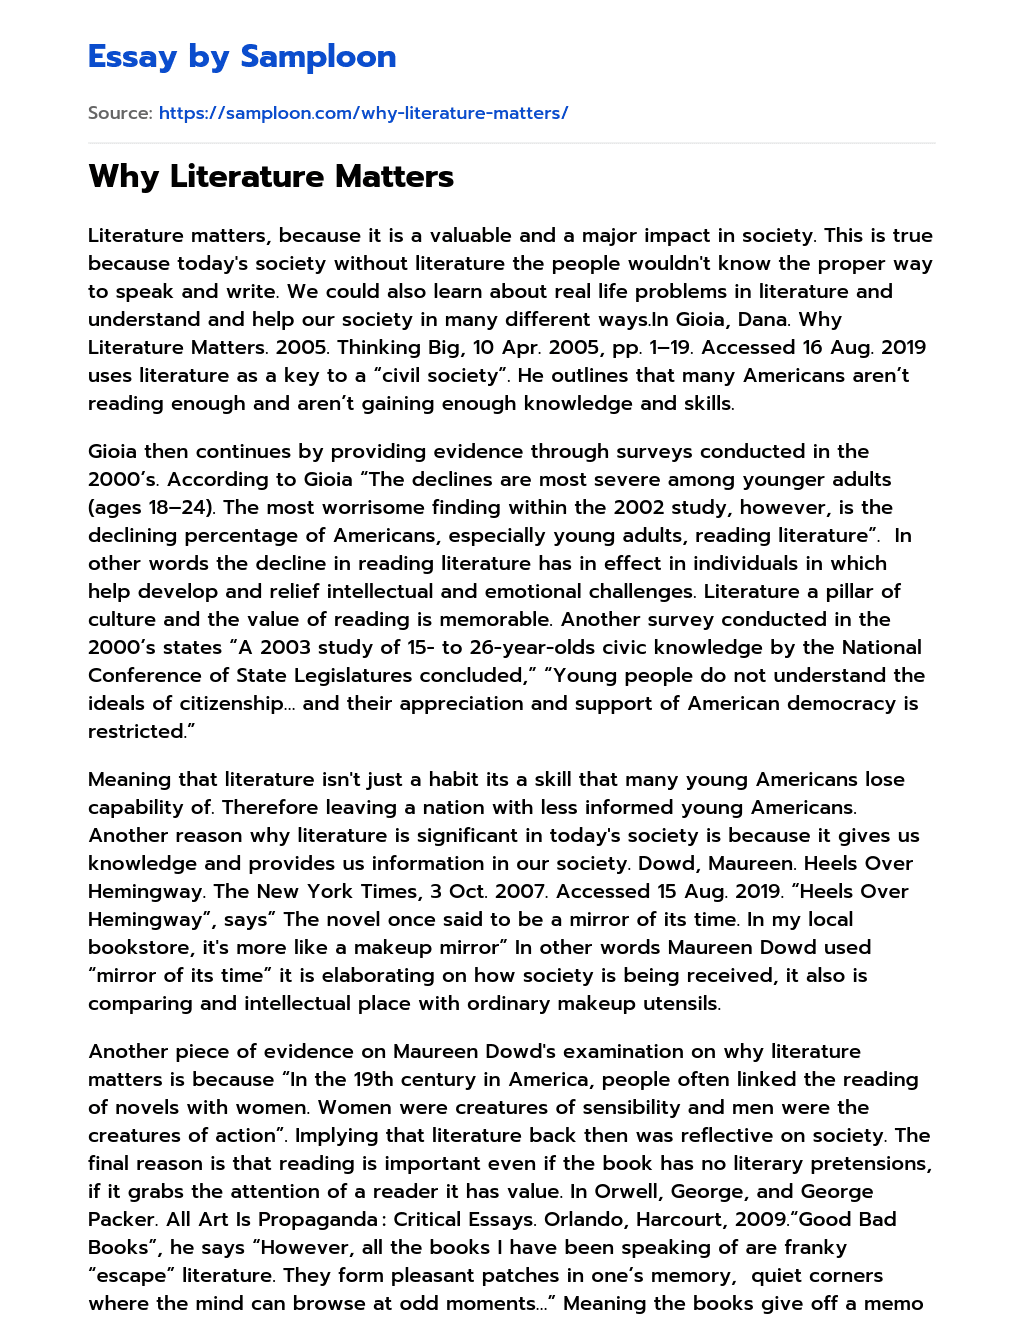 Why Literature Matters Summary essay